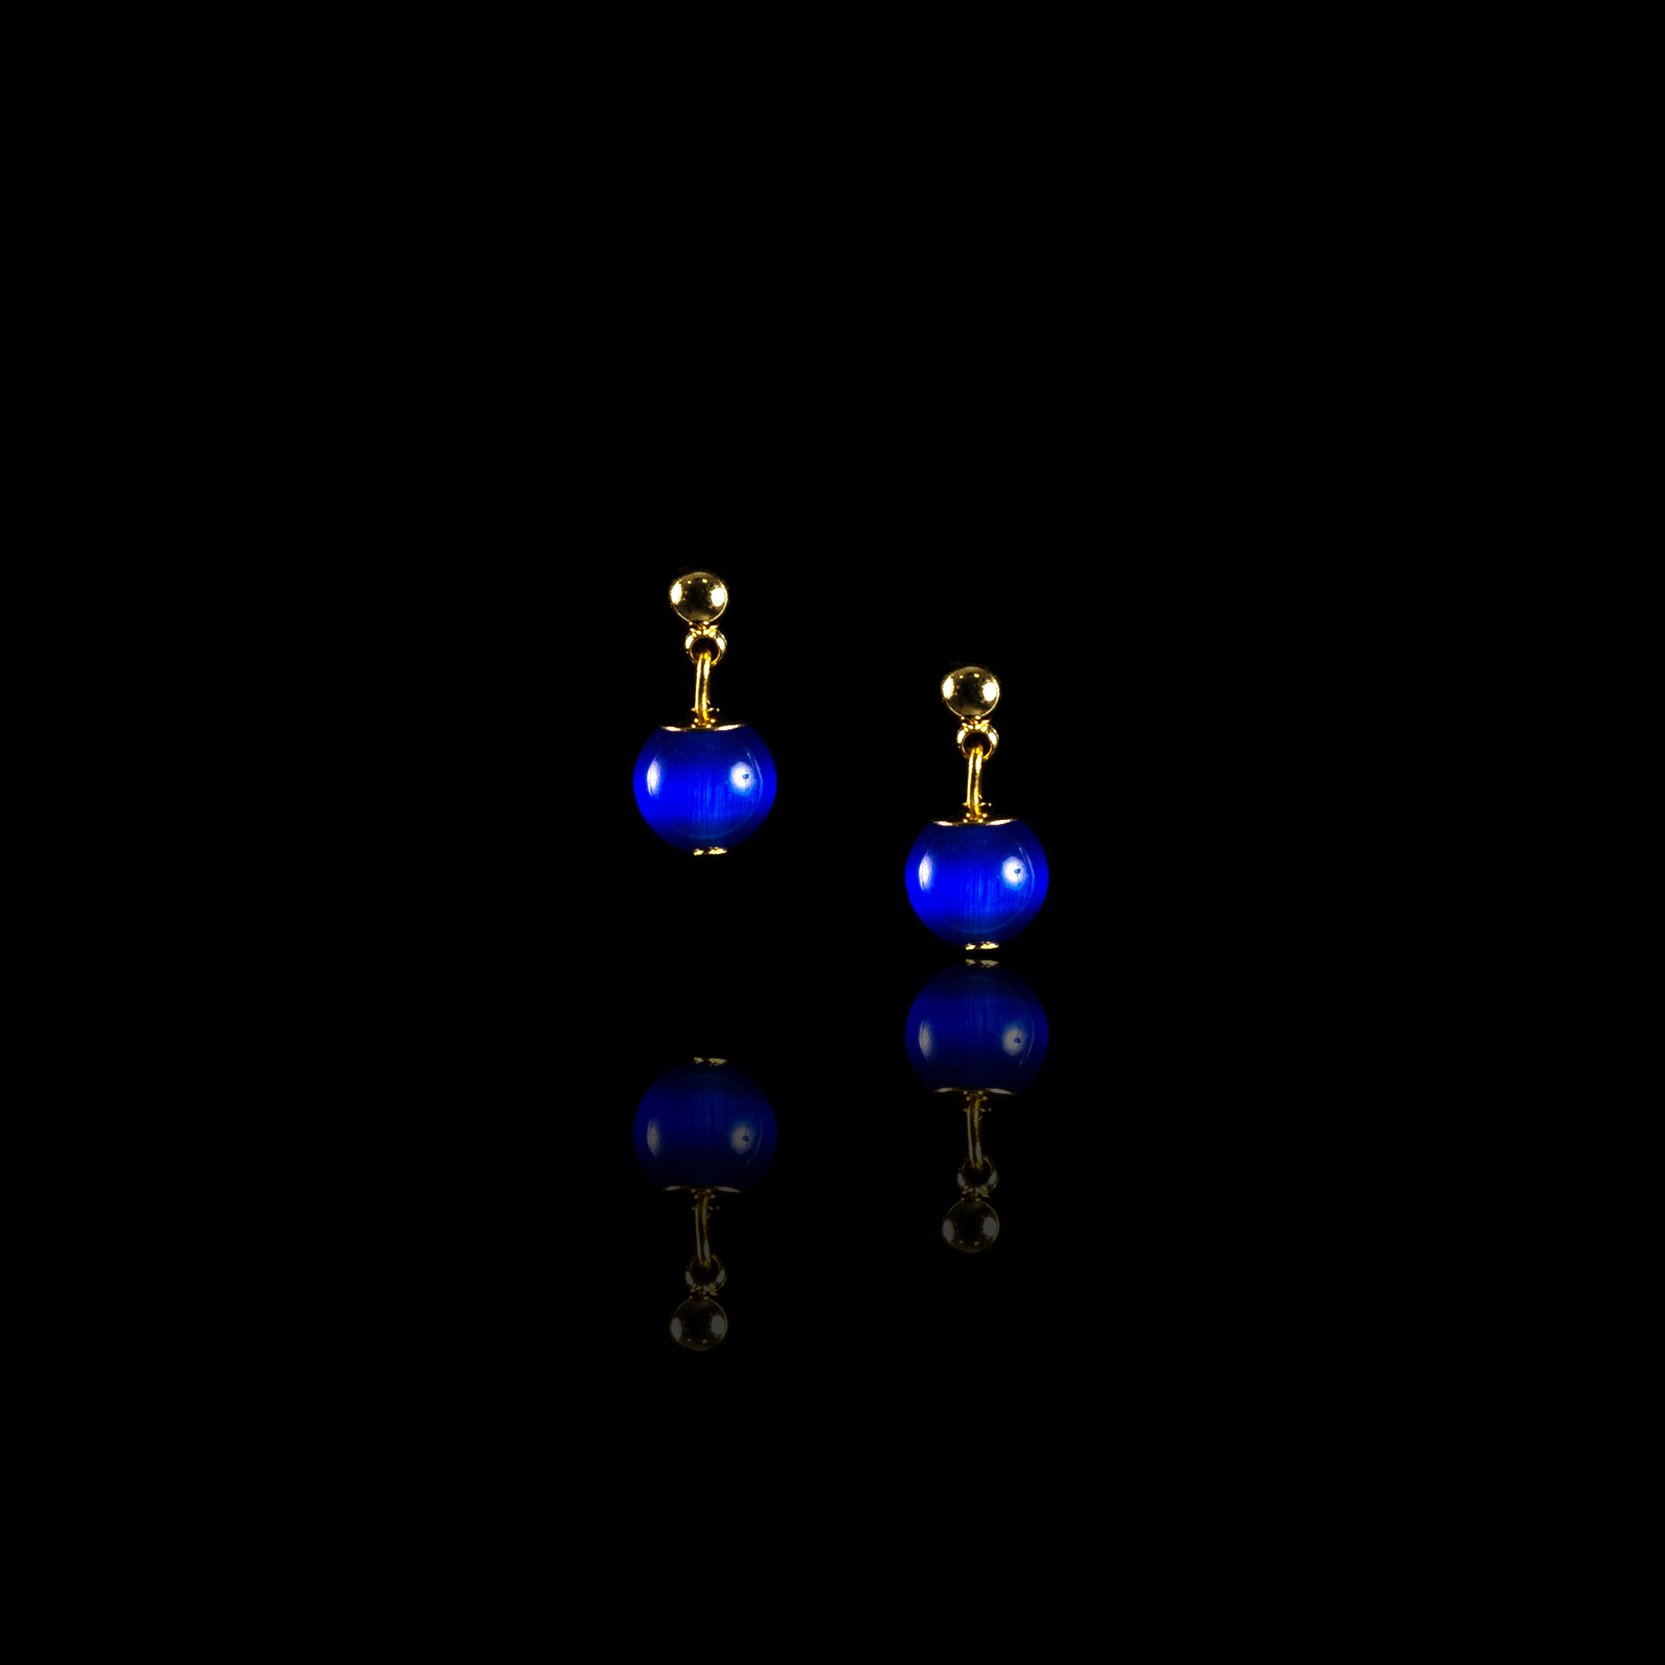 Cute stud earrings with beautiful blue stones.